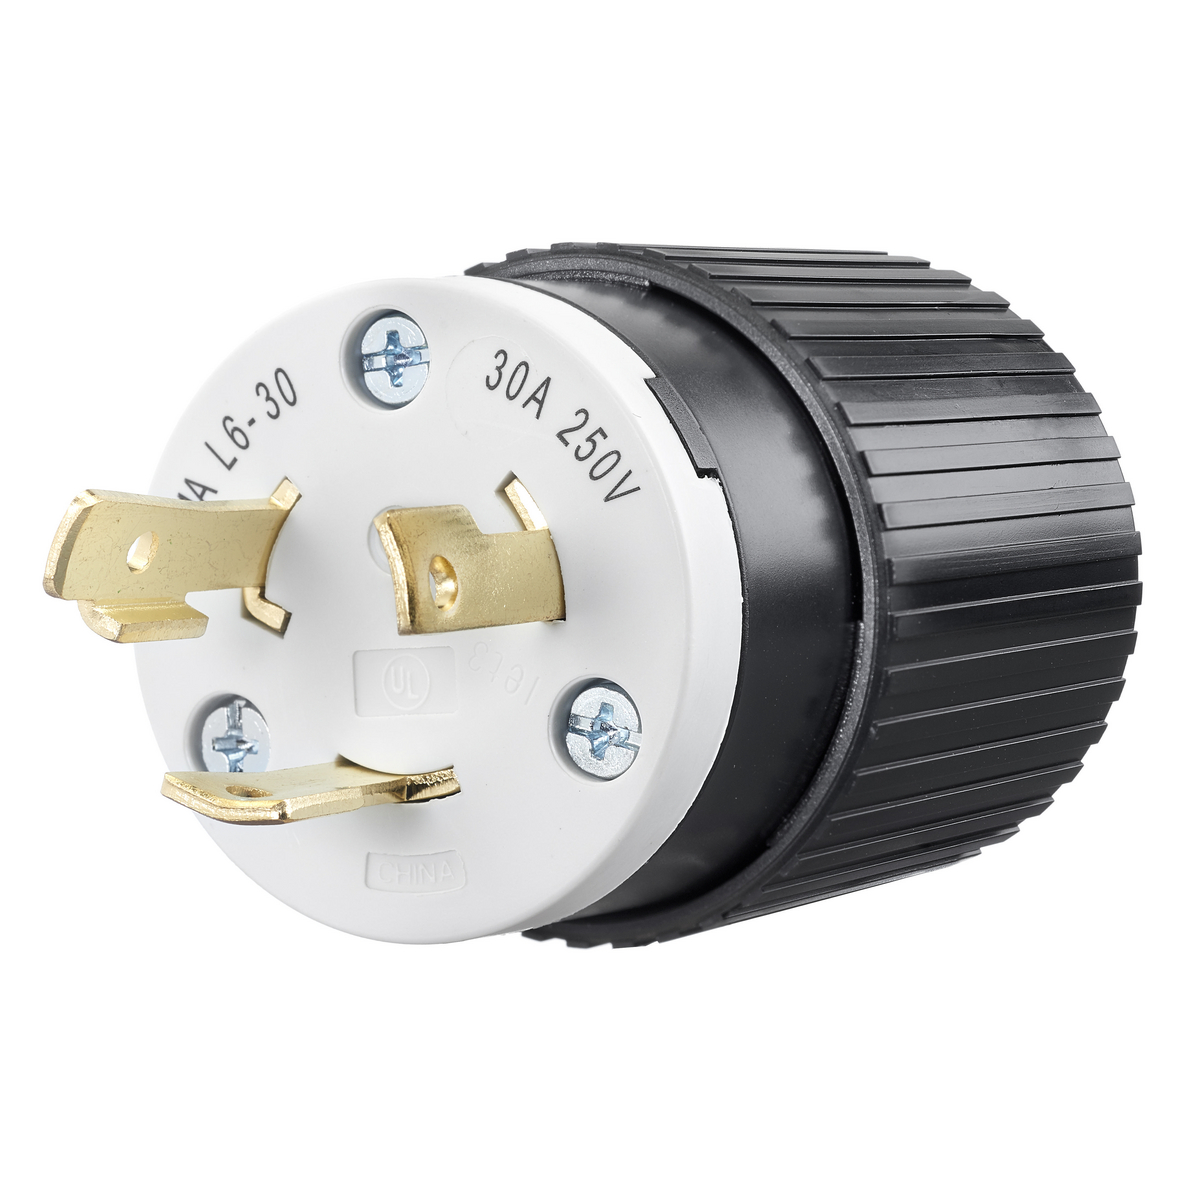 NEMA L6-30P 30A 250V Industrial Twist Lock Locking Power Plug Connector 3-Wire